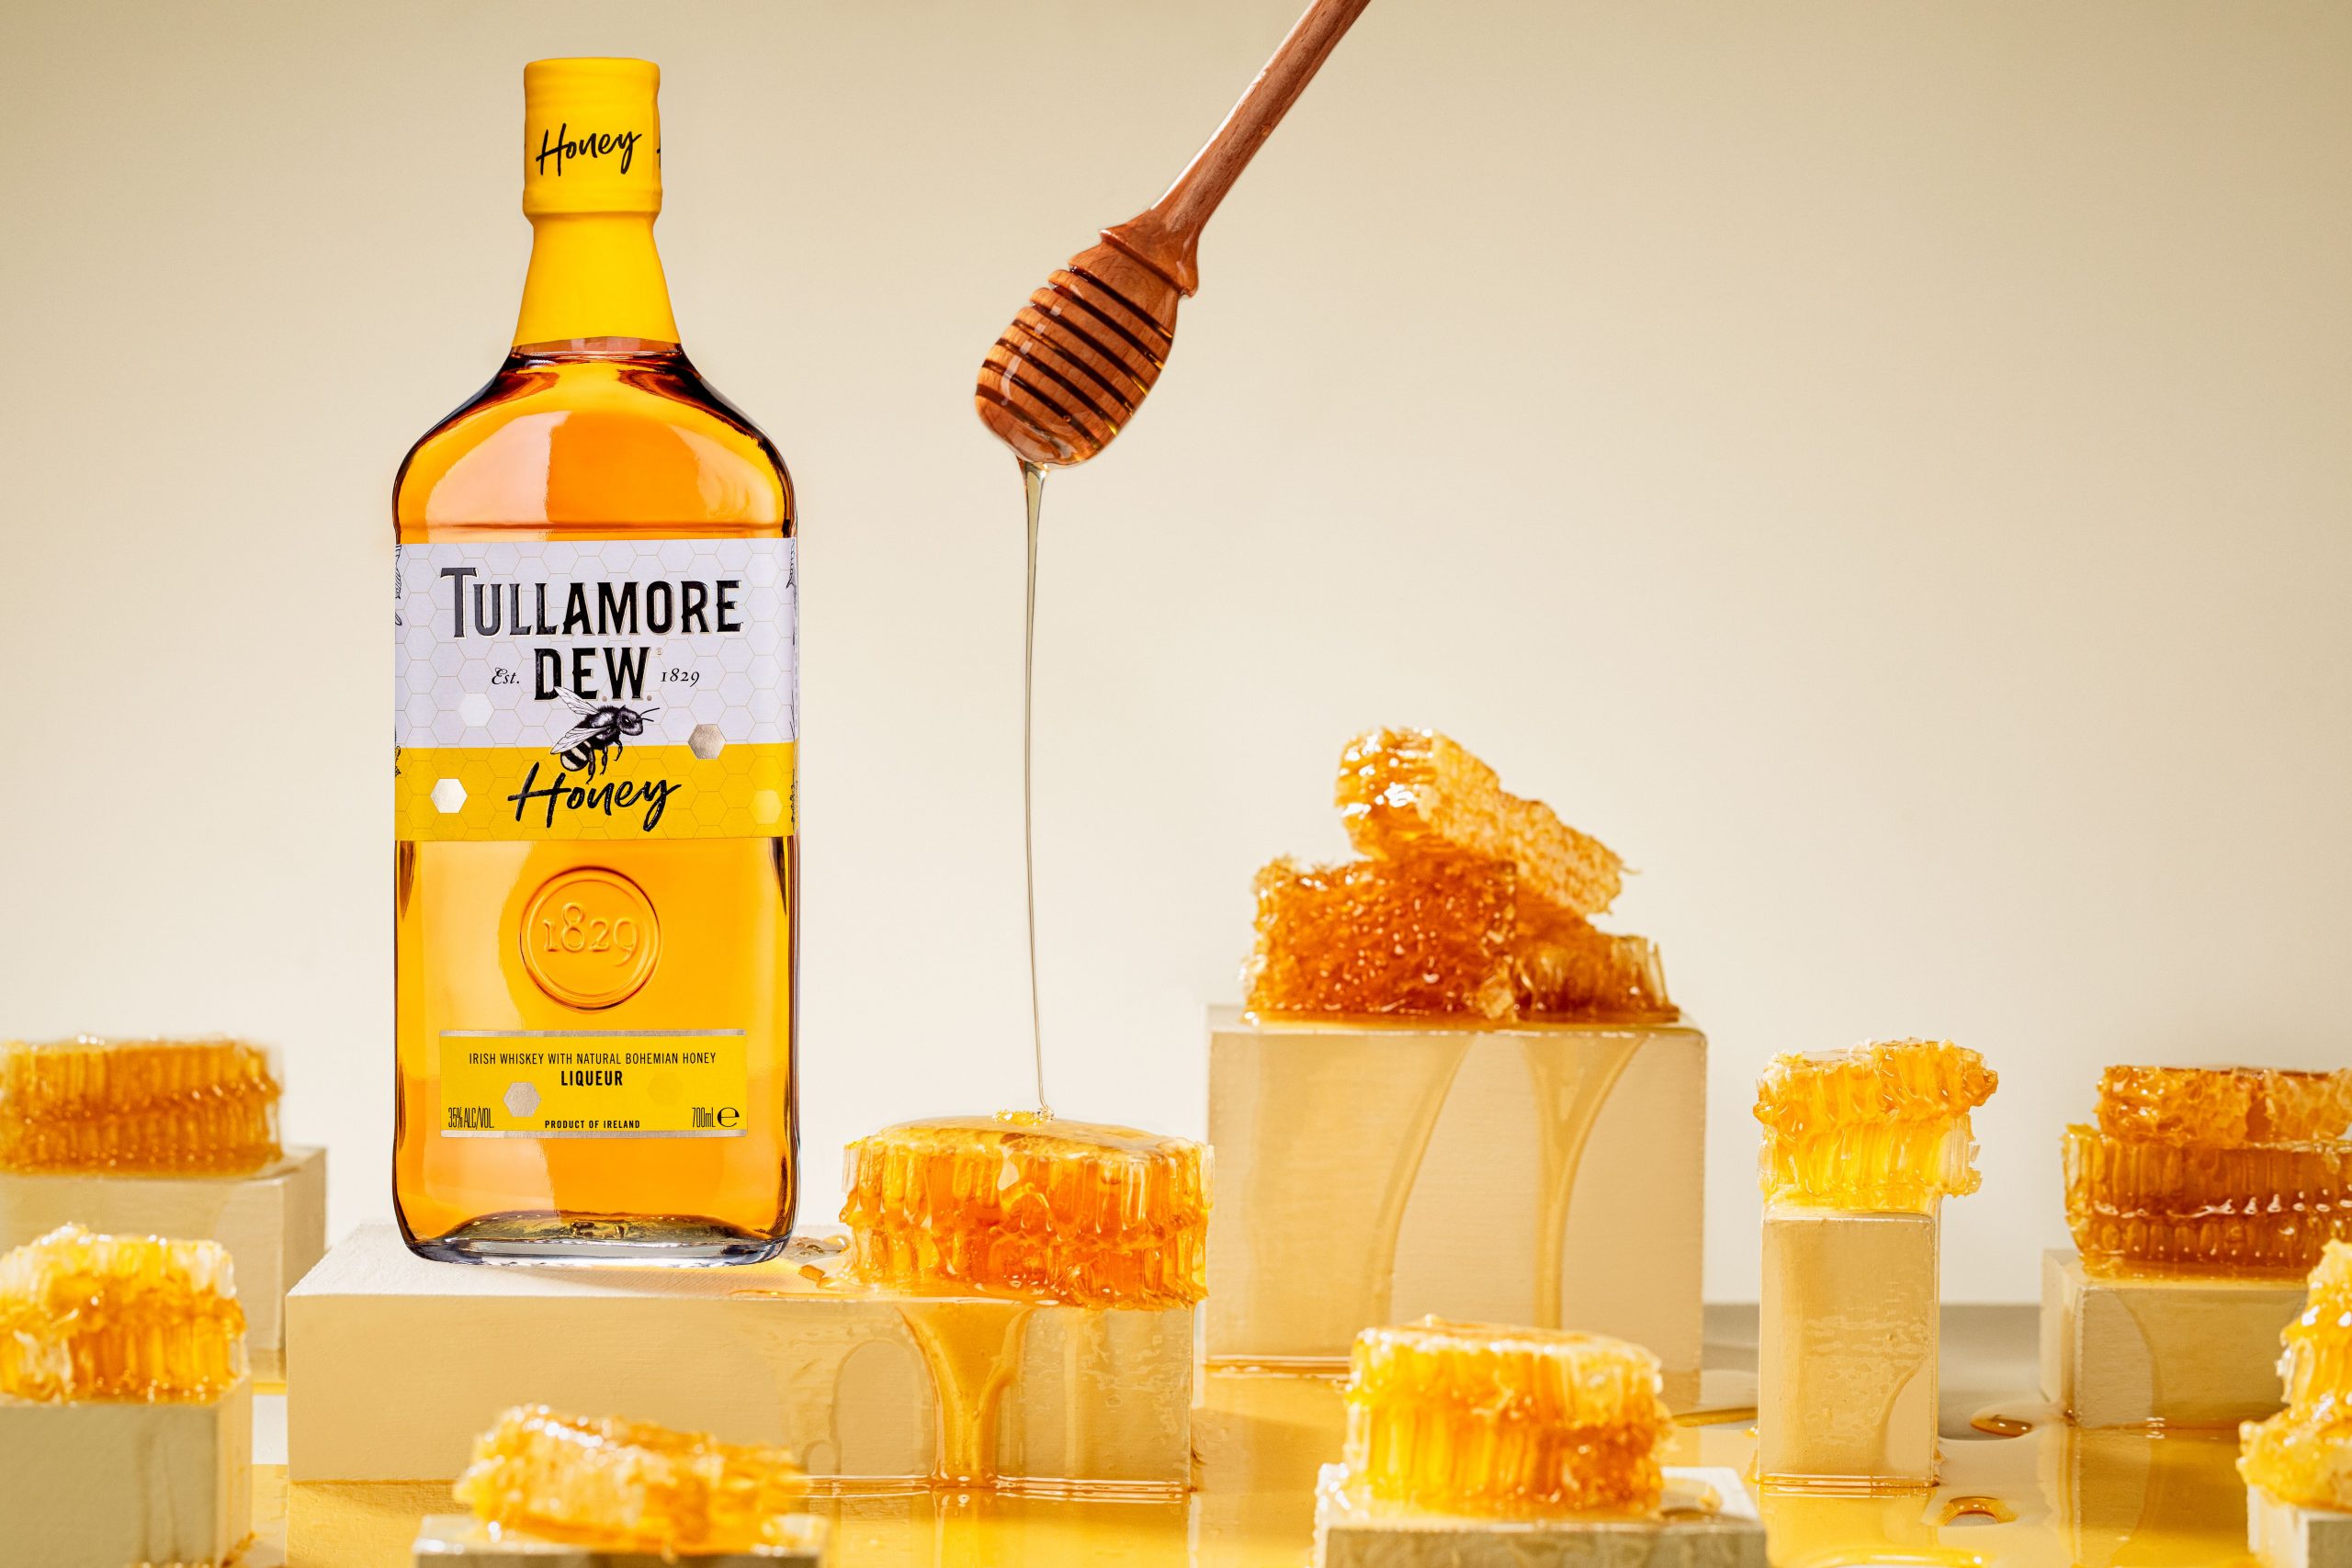 Tullamore D.E.W introduces new whiskey innovation Tullamore D.E.W. Honey